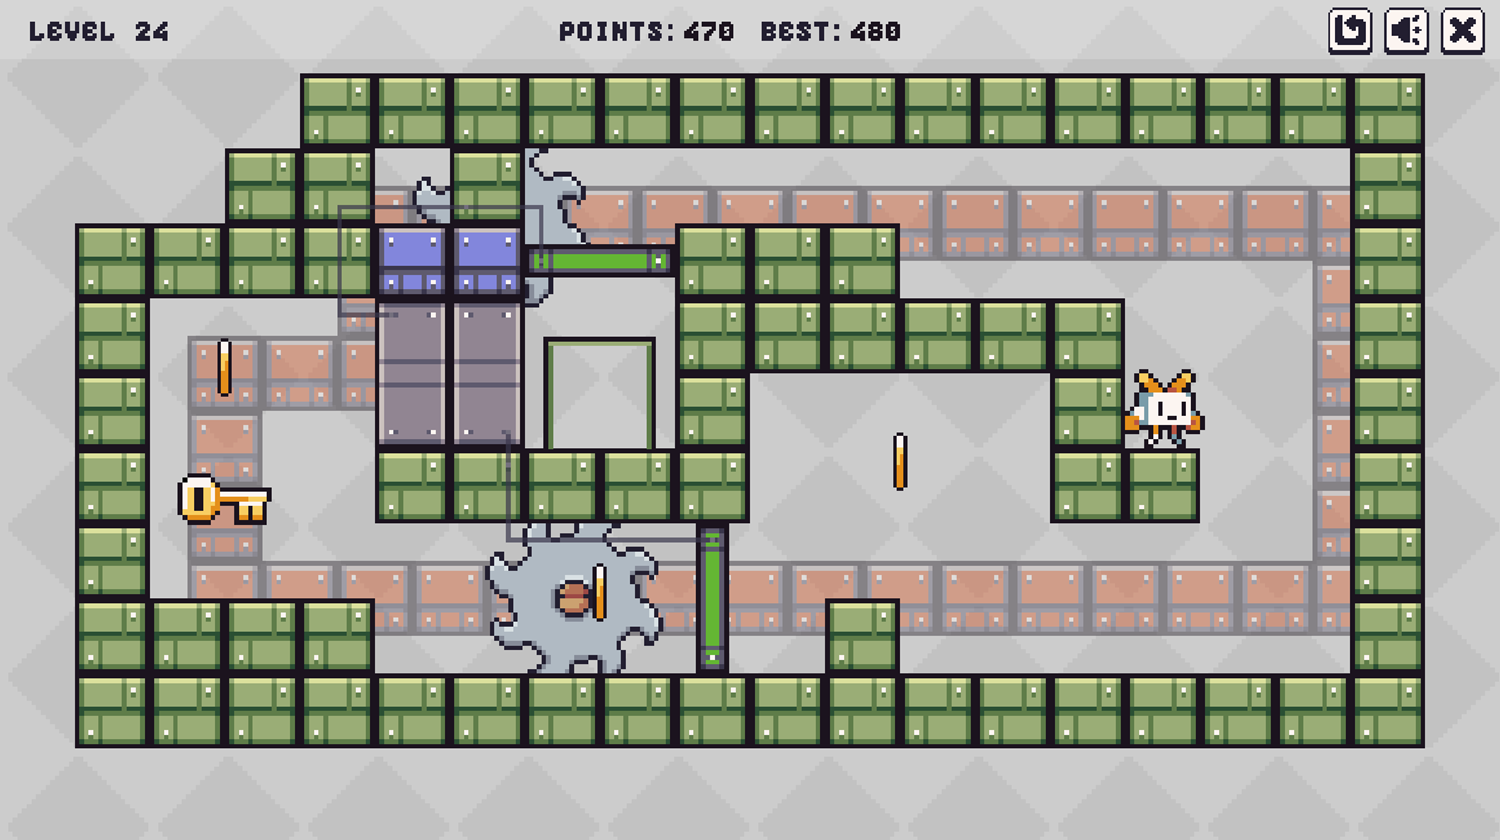 Robo Exit Game Final Level Screenshot.